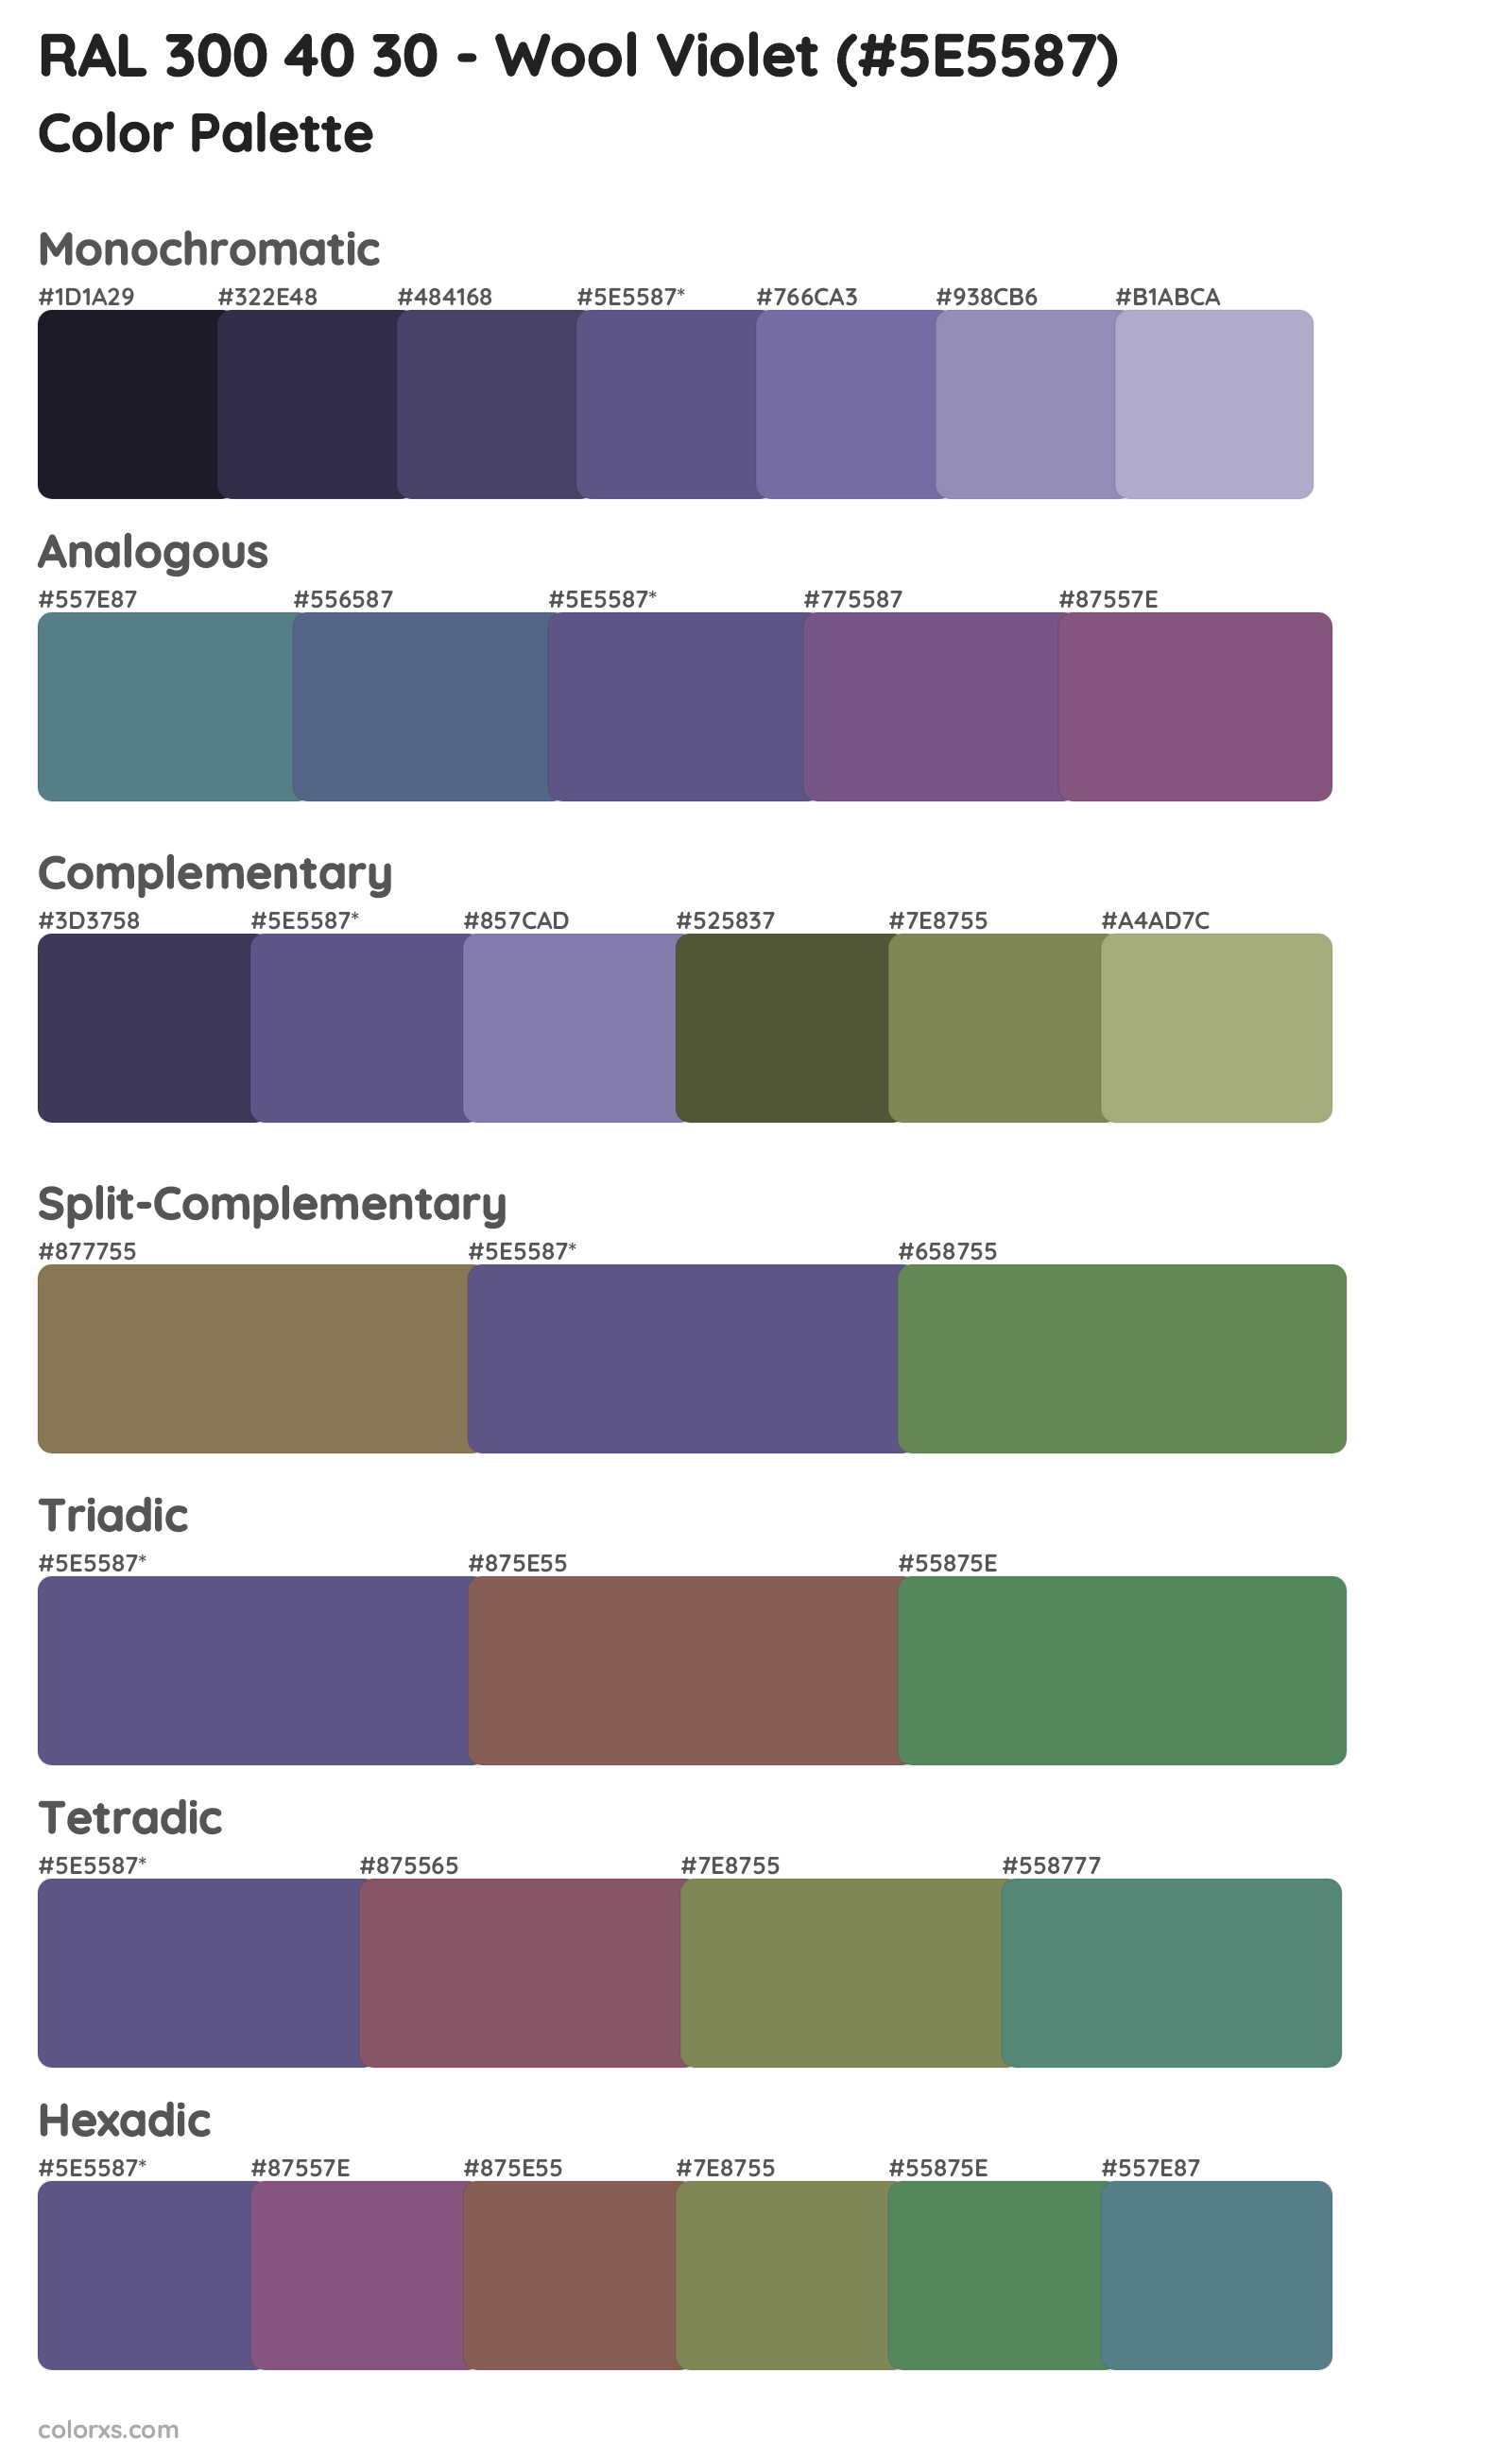 RAL 300 40 30 - Wool Violet Color Scheme Palettes